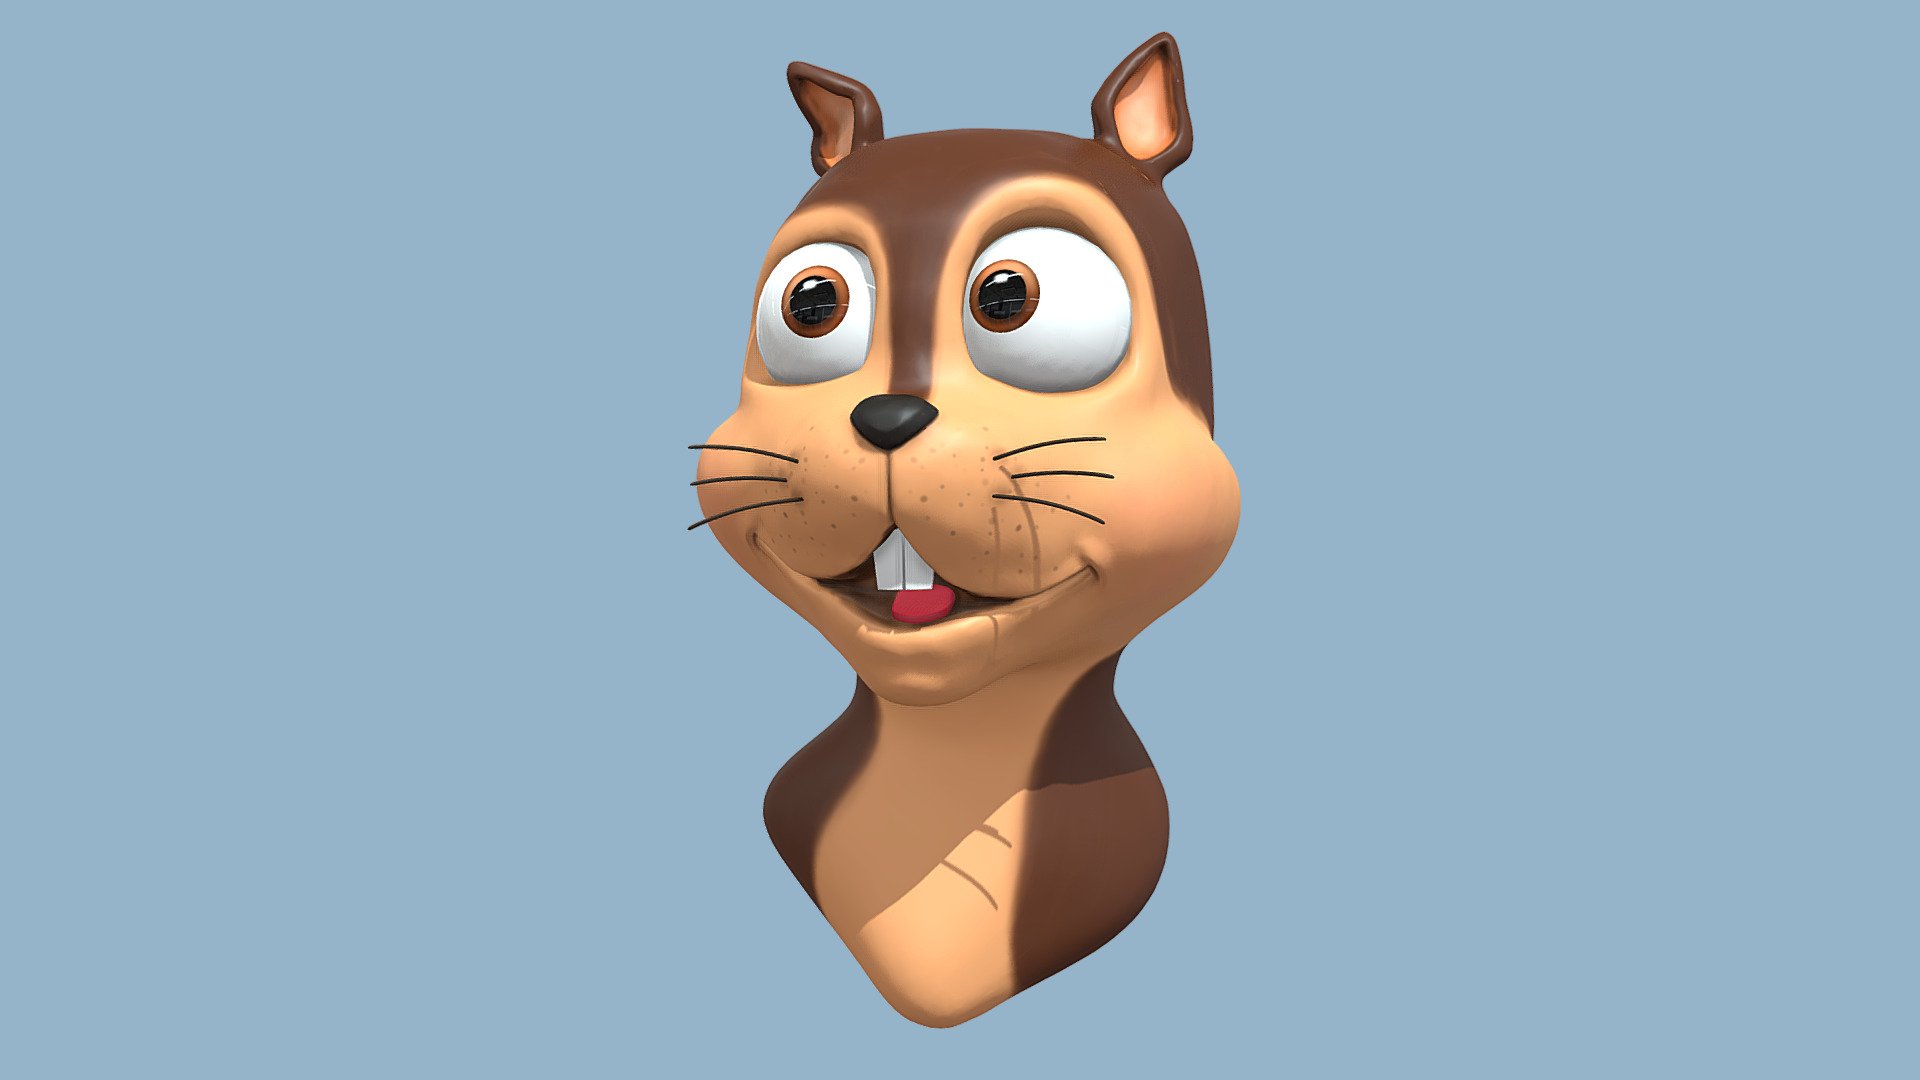 ArtStation - Stylized Chipmunk Character Sculpt